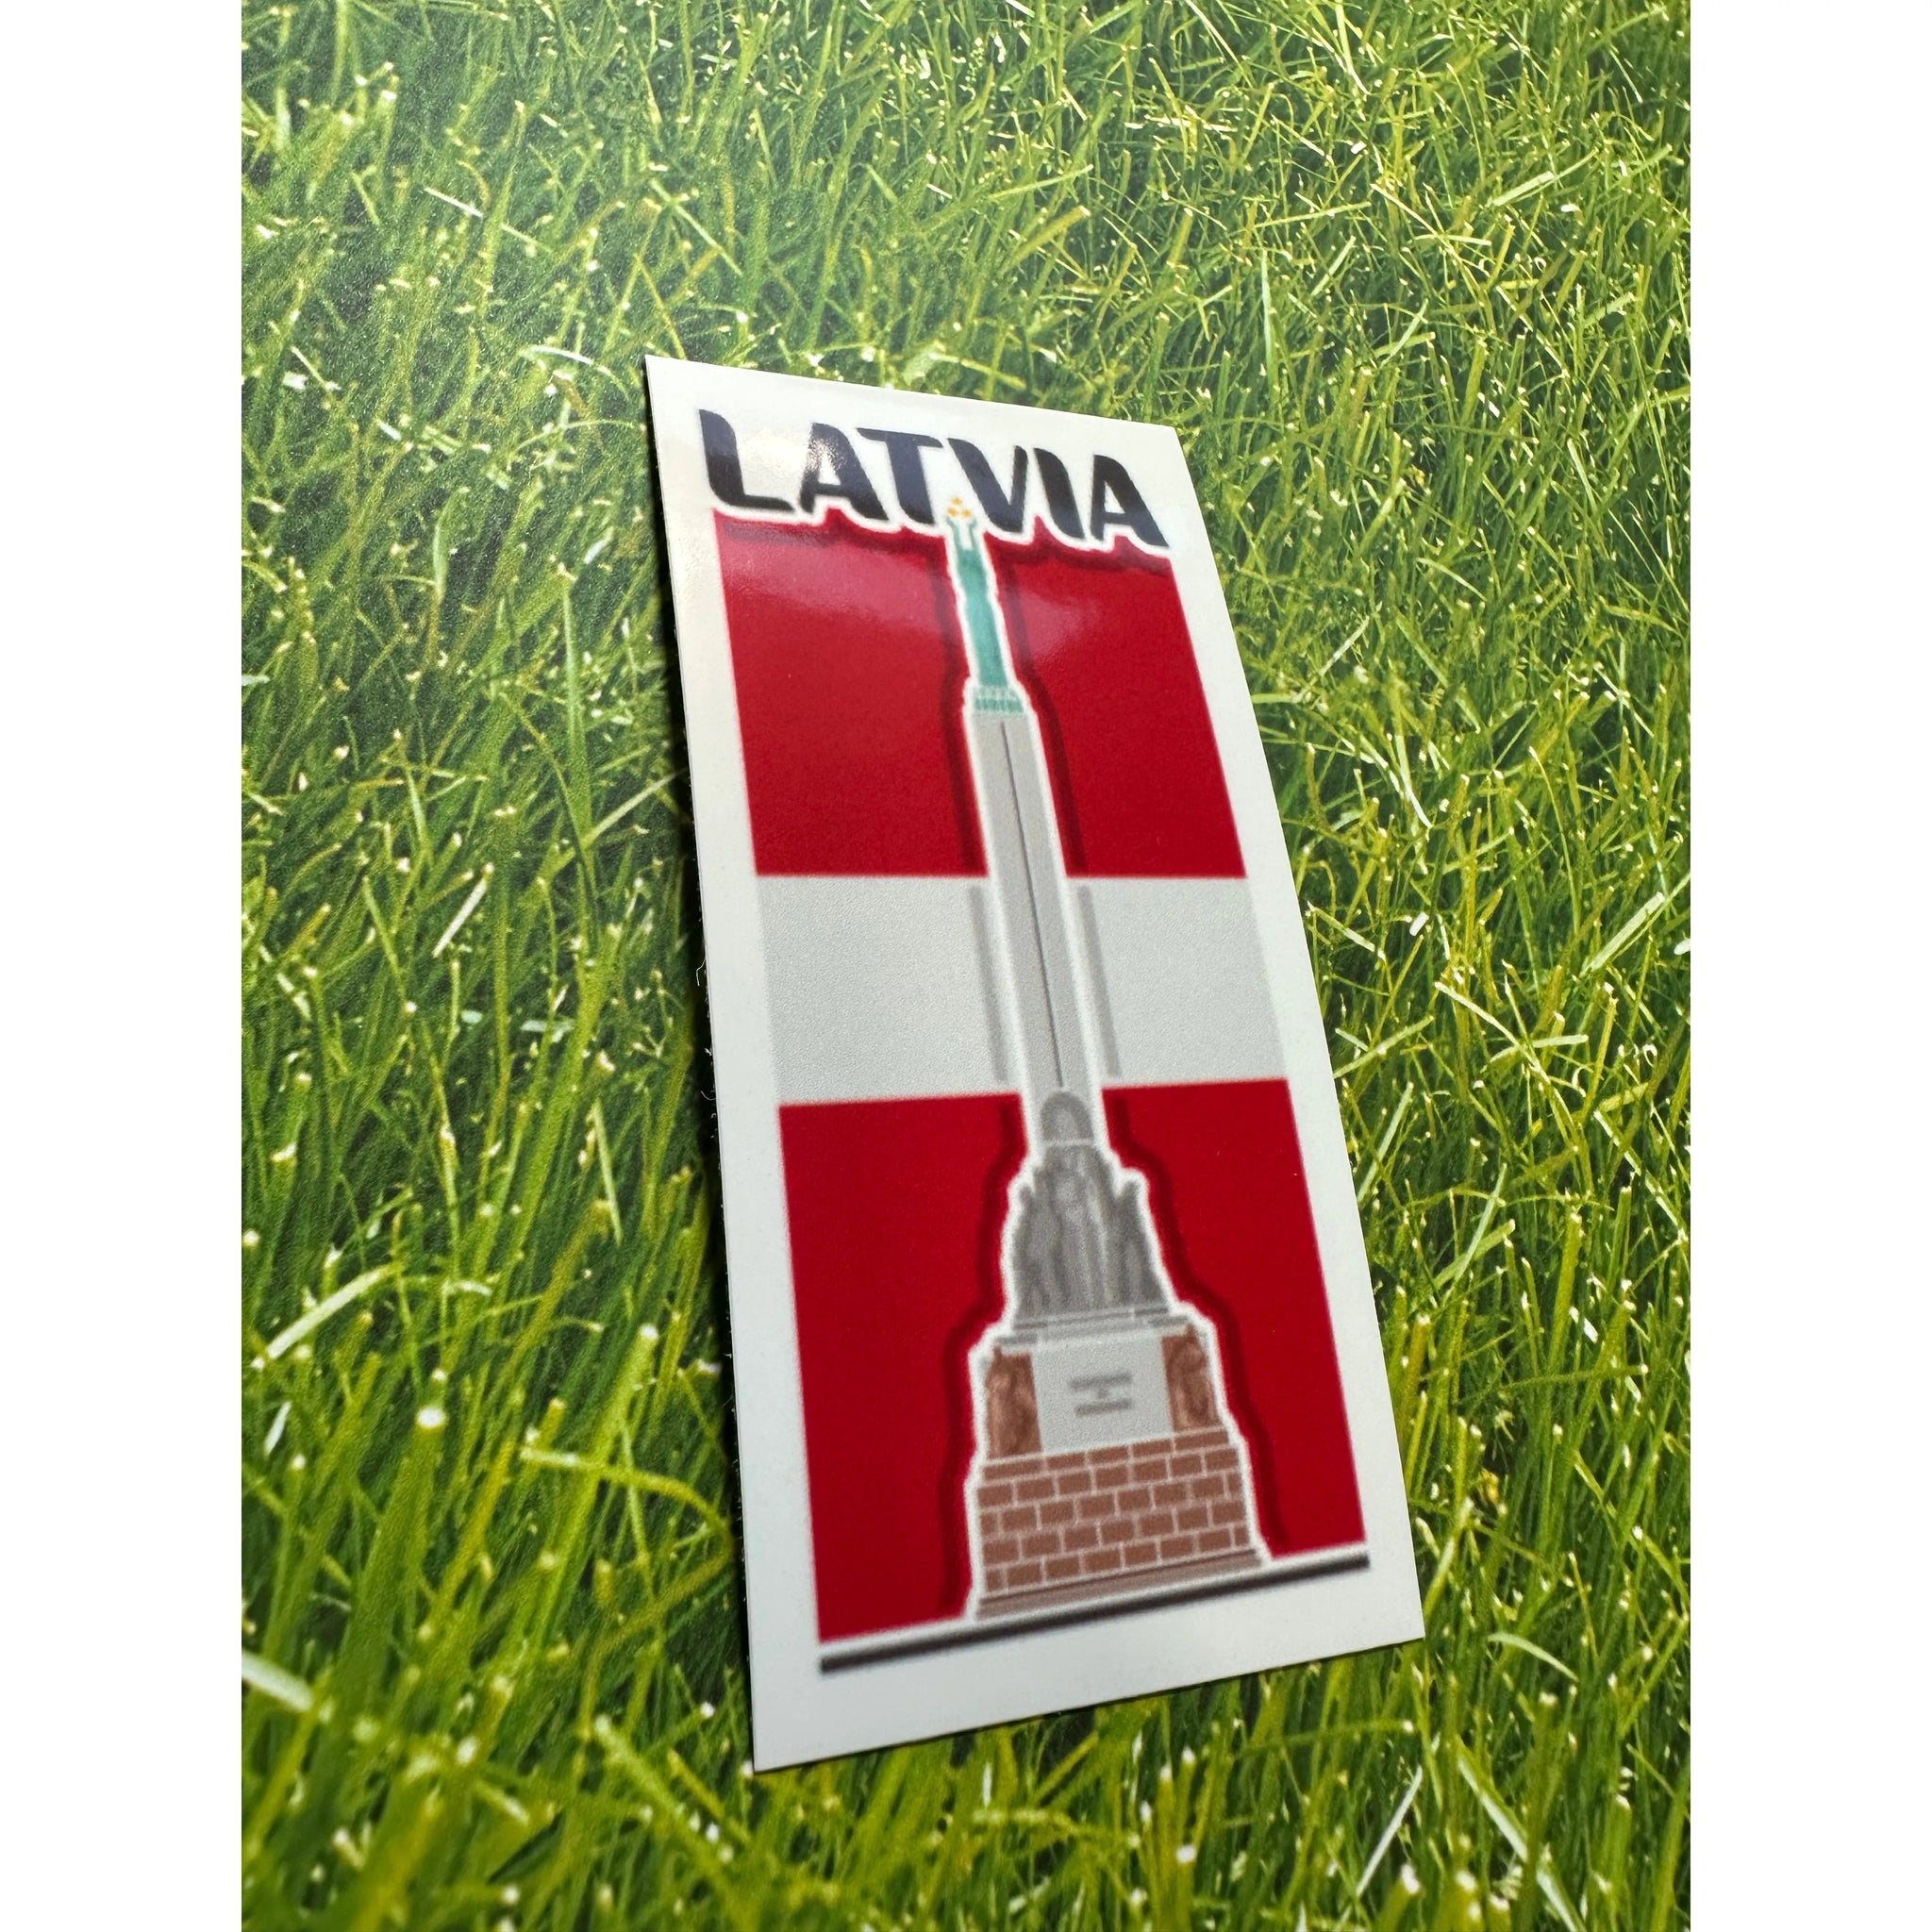 Latvia Vinyl Decal Sticker - The European Gift Store